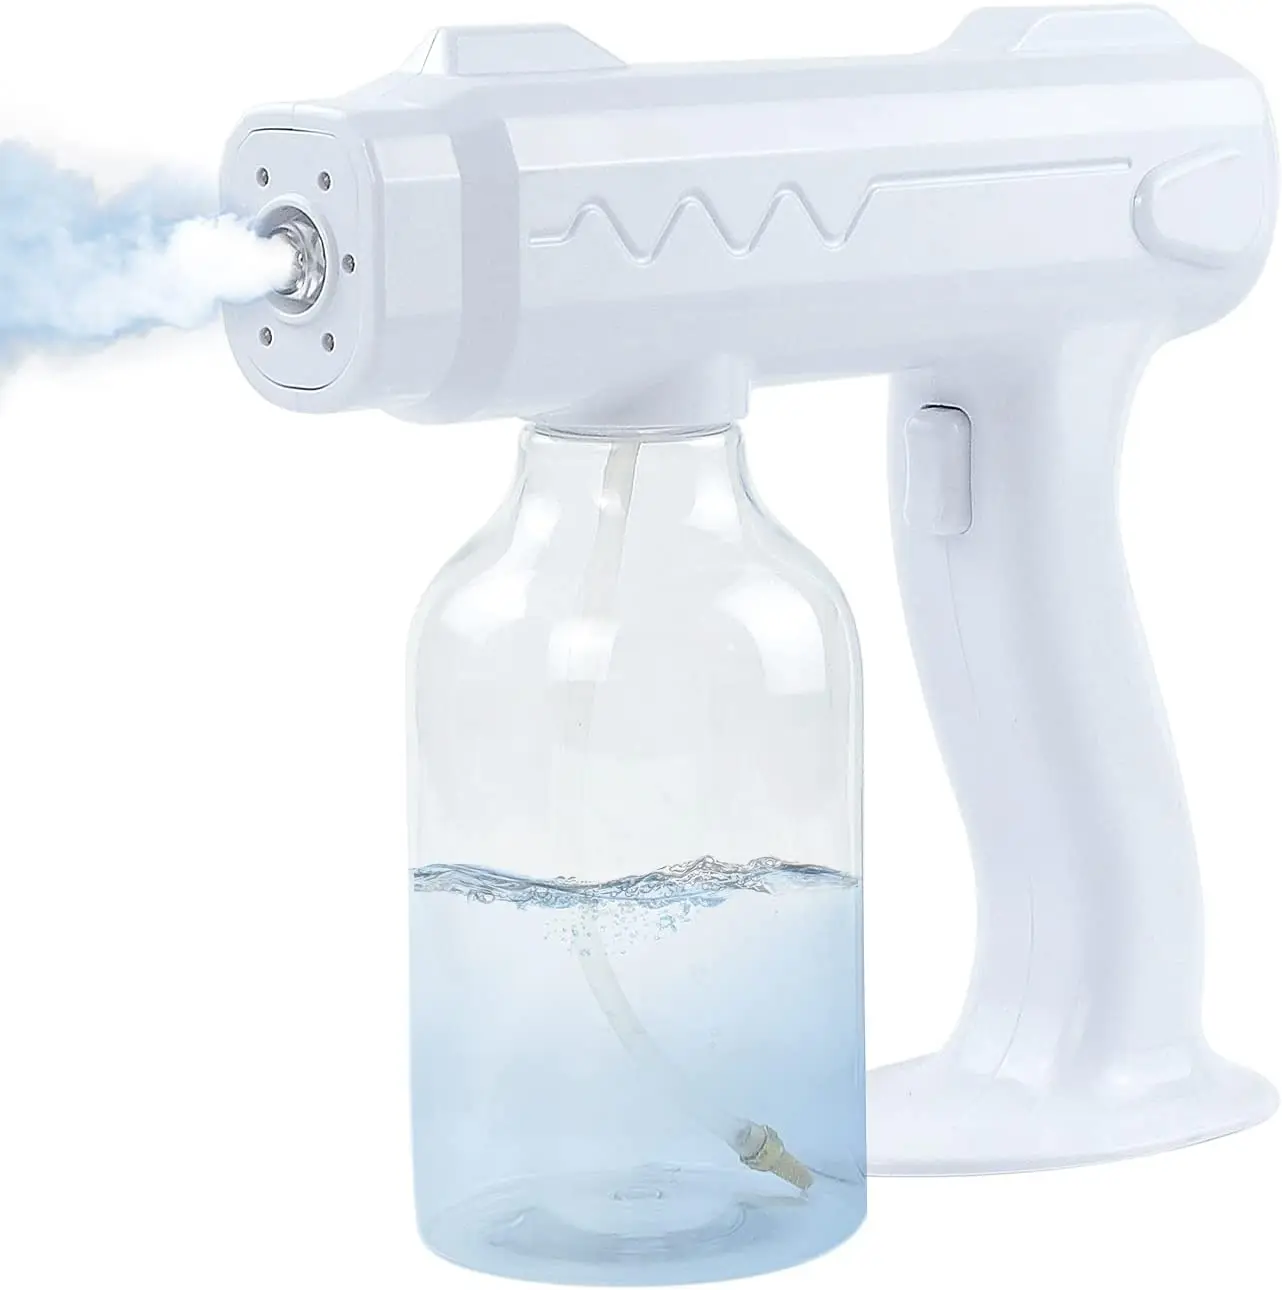 

Sanitizer fogger, Disinfectant Spray Gun, Rechargeable Nano Mist ULV fogger 800ml Electric Atomizer Sprayer Disinfection, White